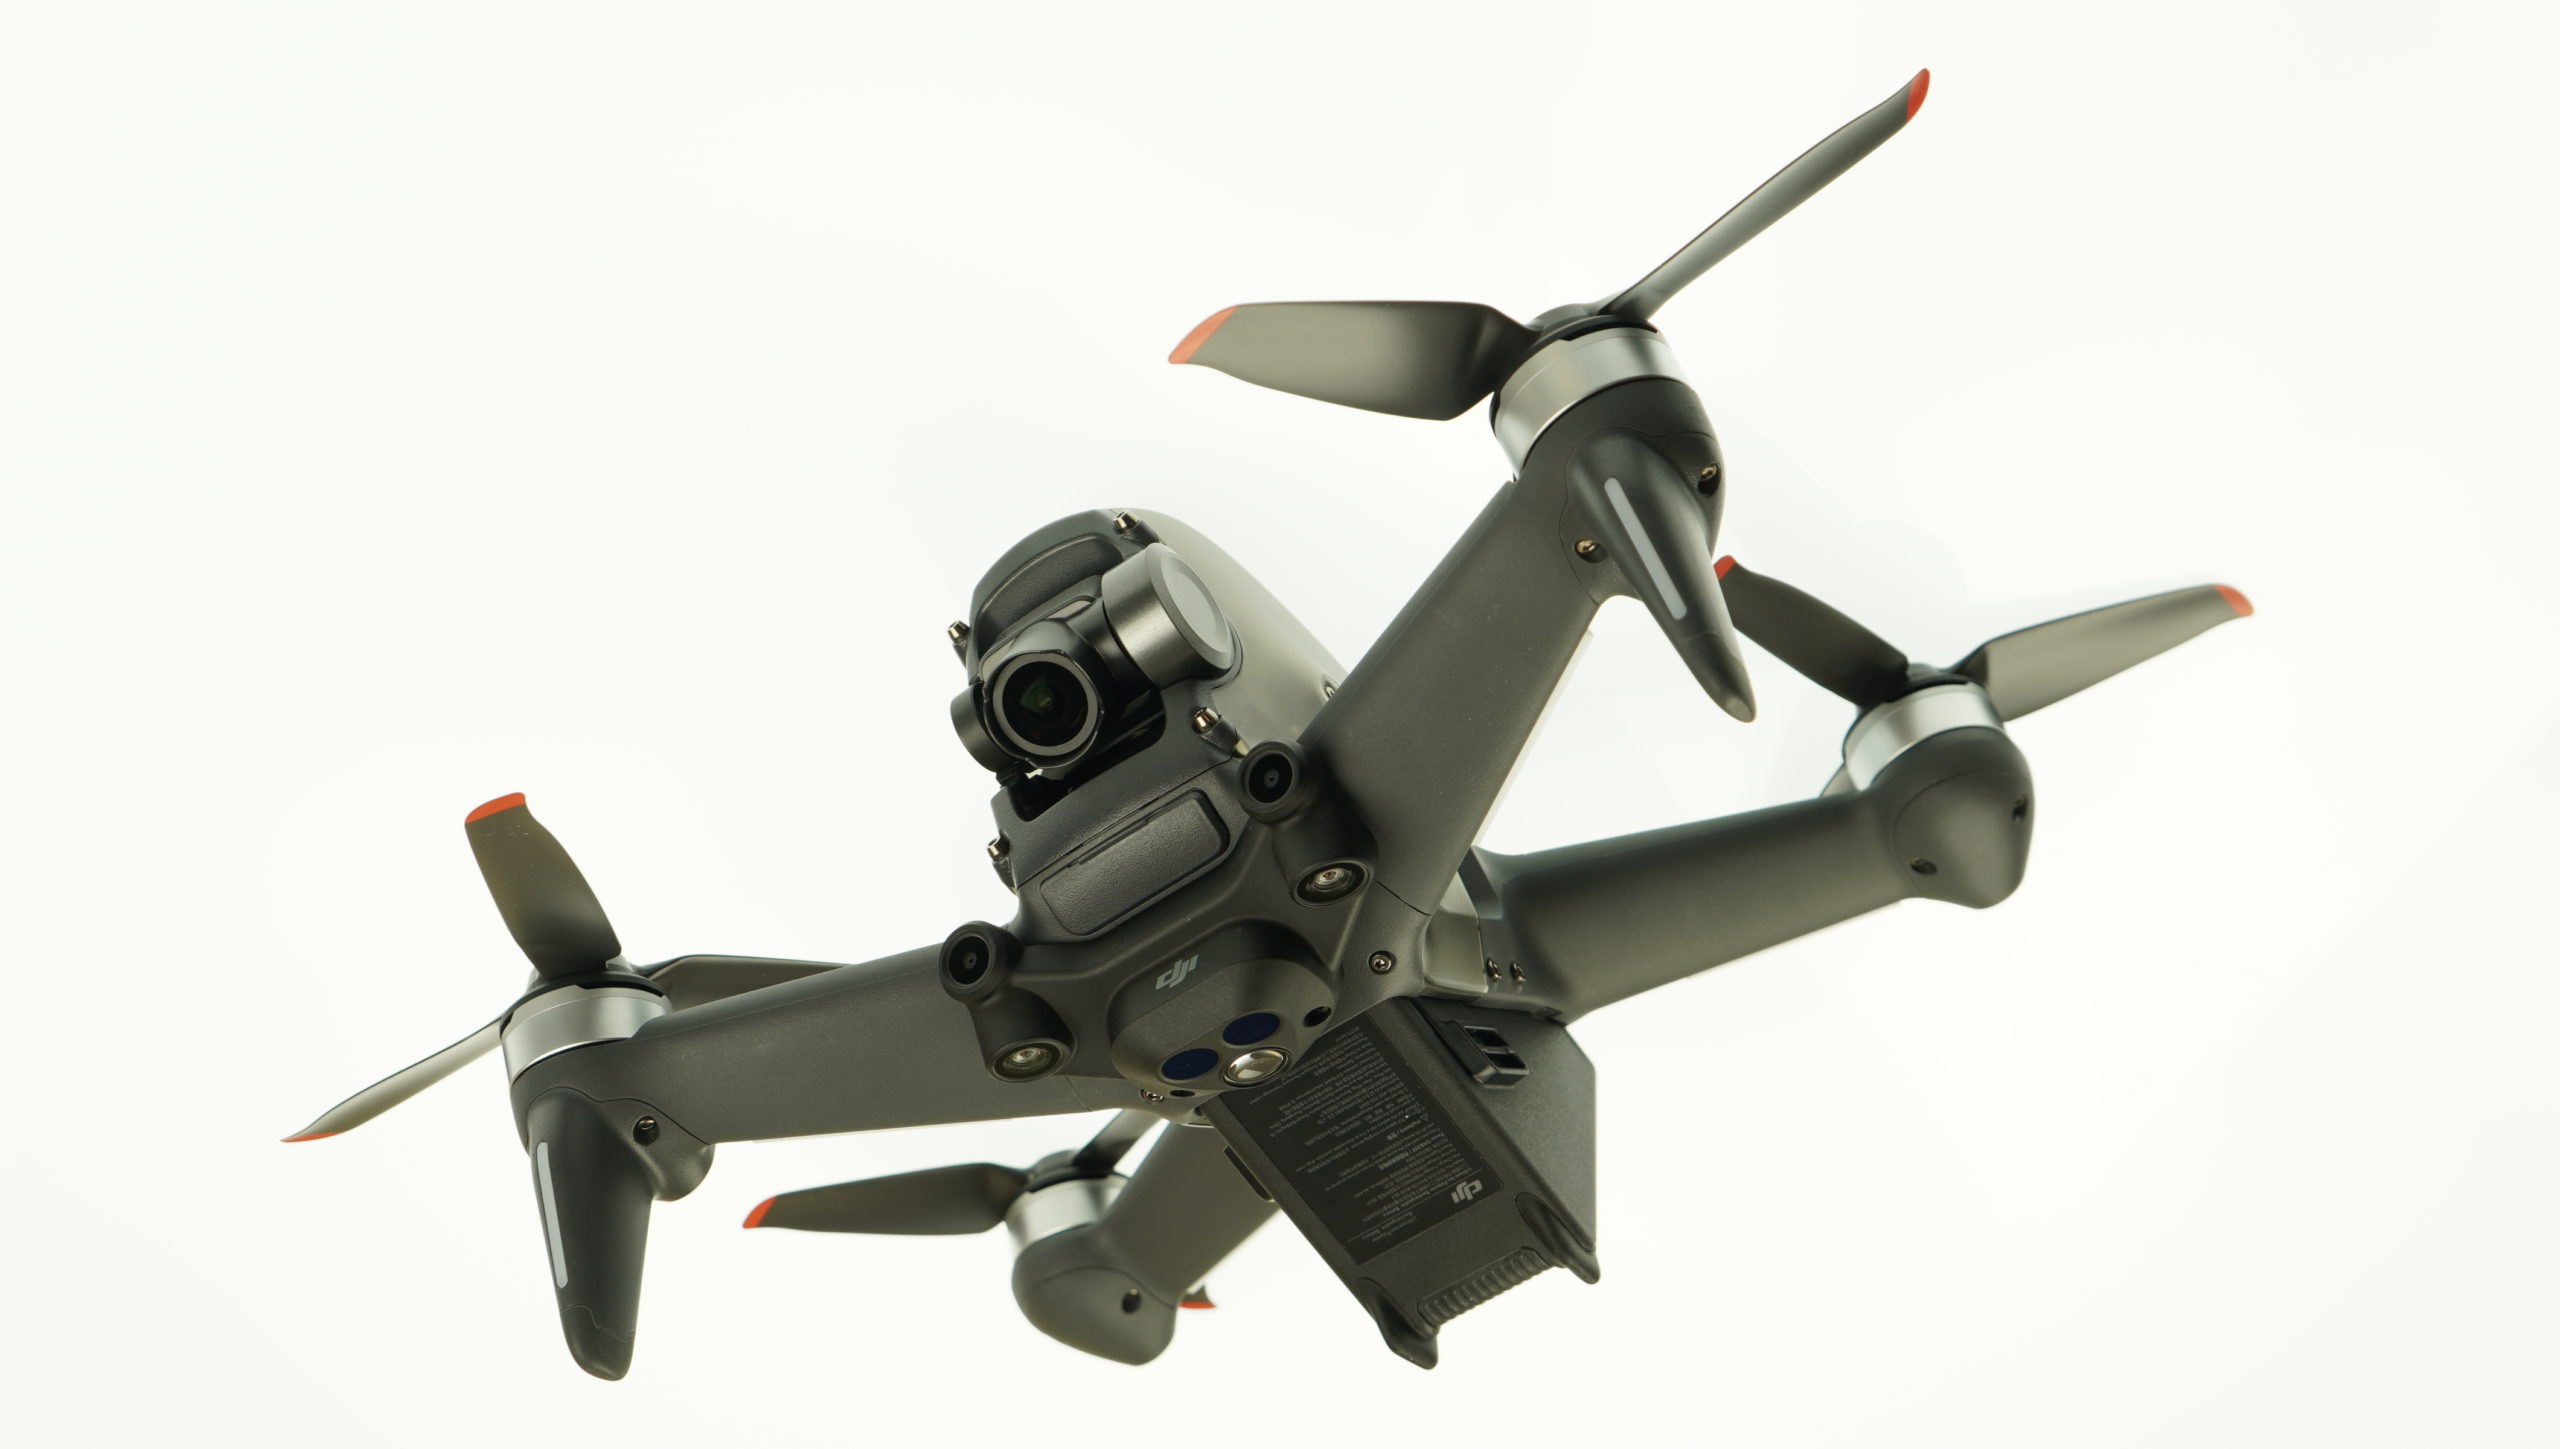 DJI FPV drone sensors